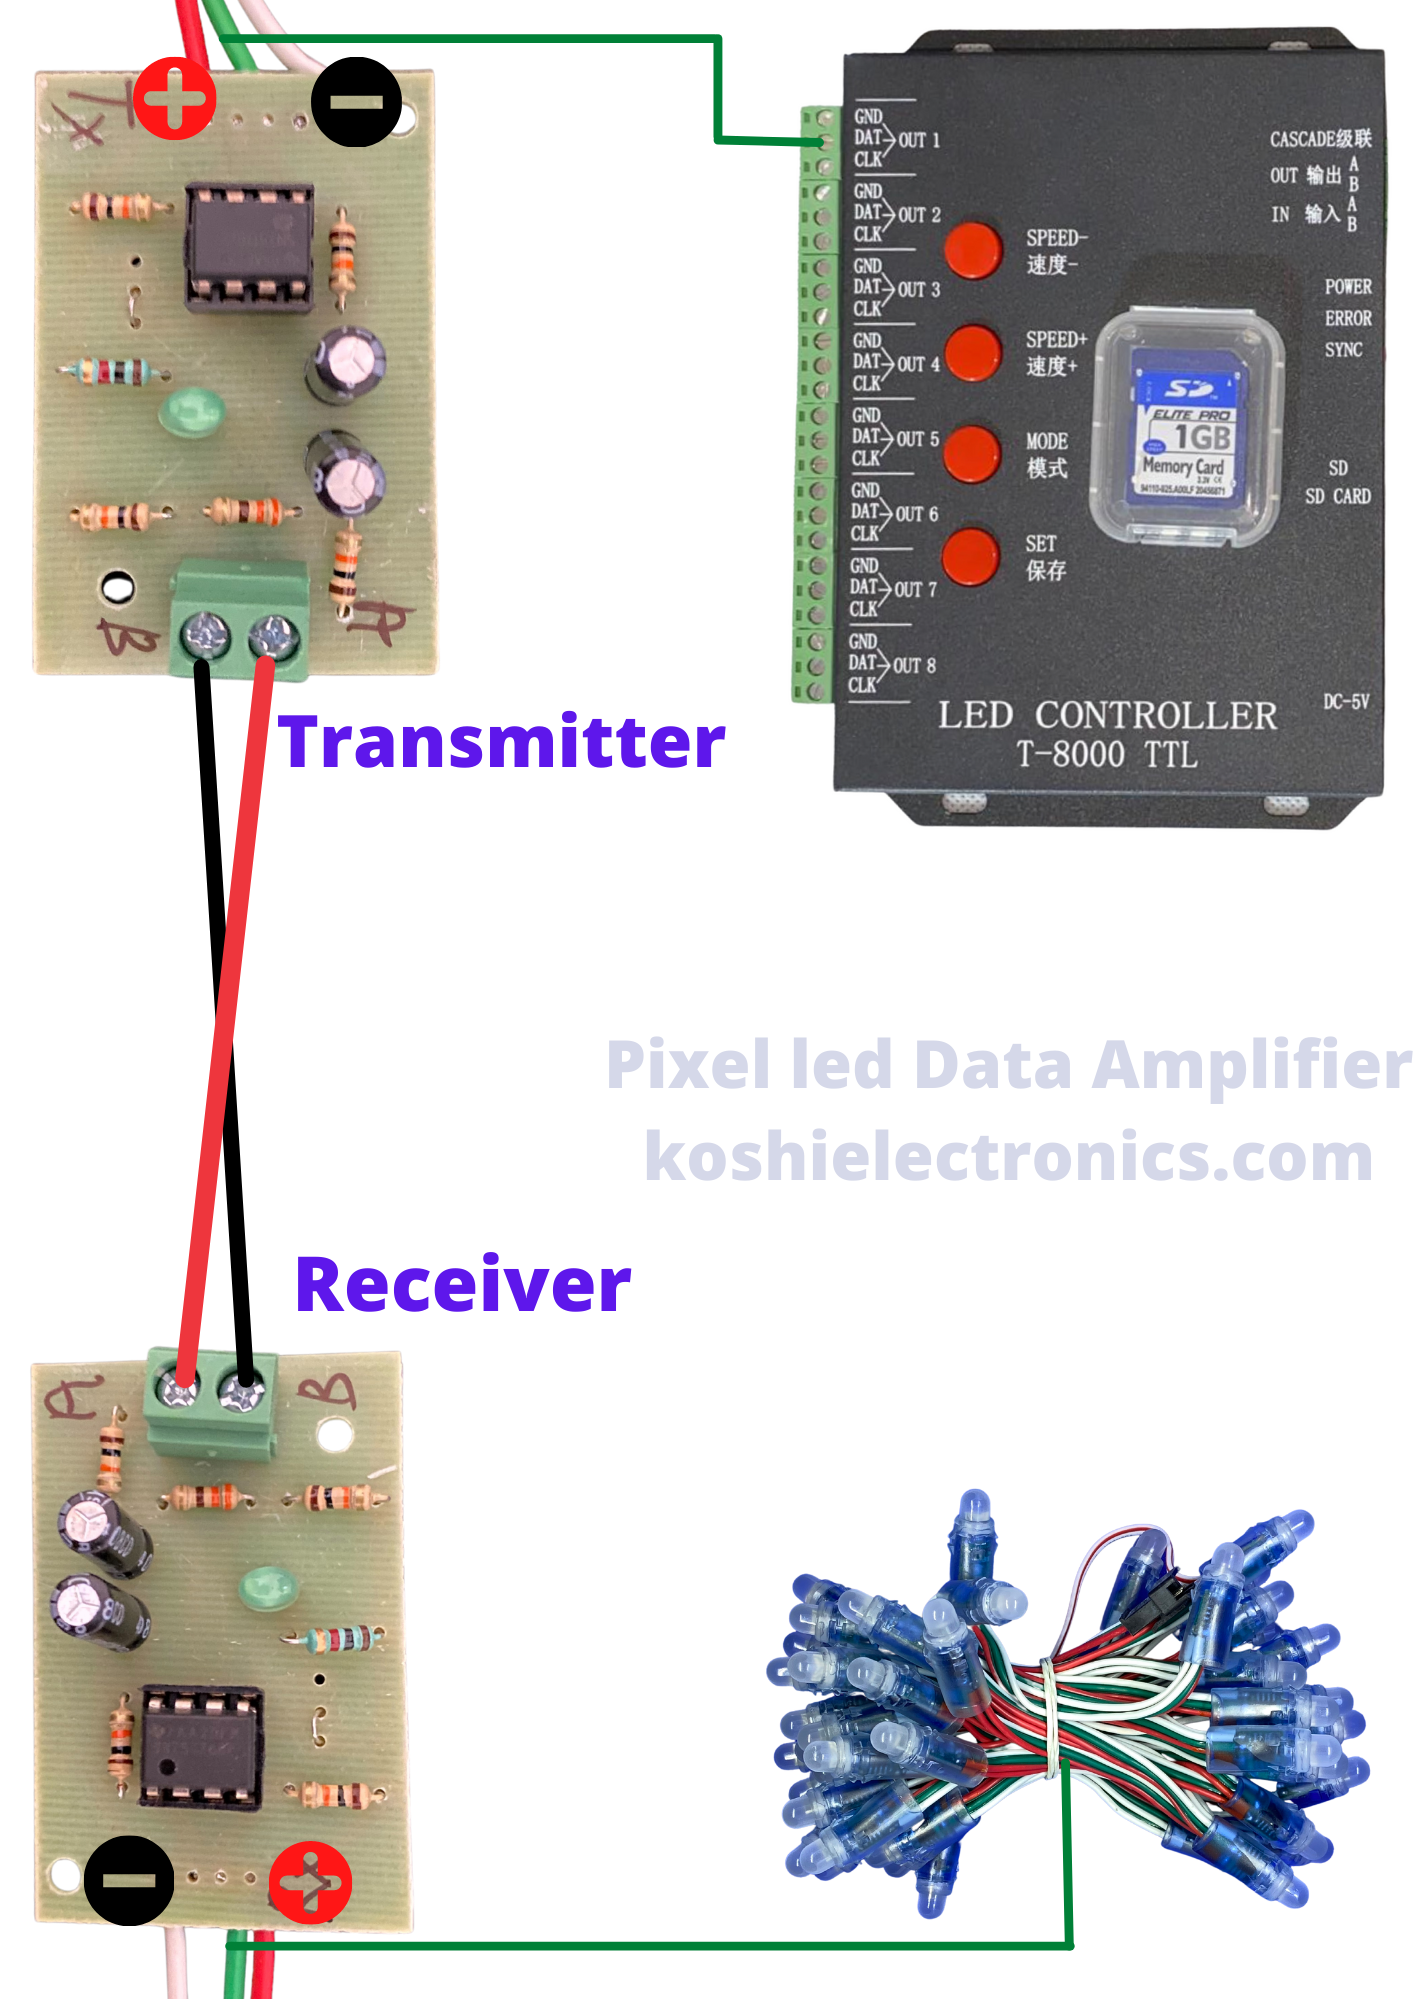 Pixel led Data Amplifier